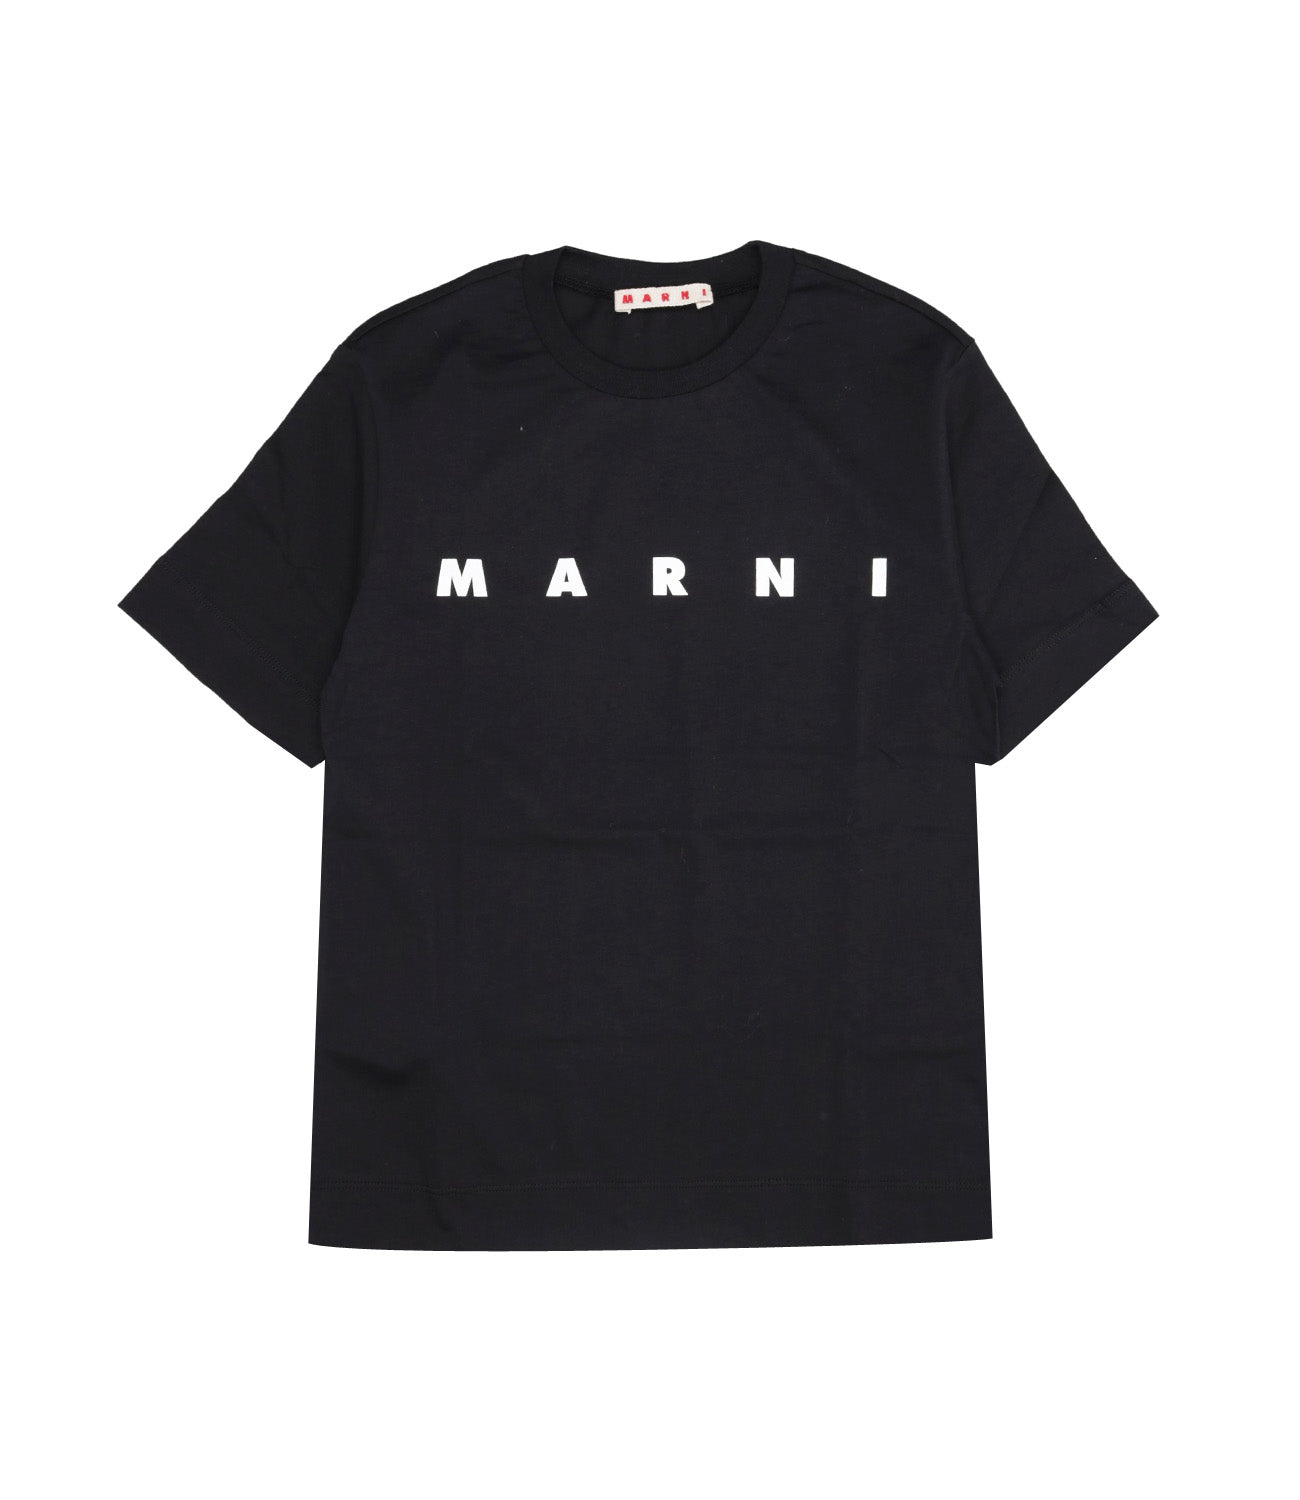 Marni Kids | Black T-Shirt